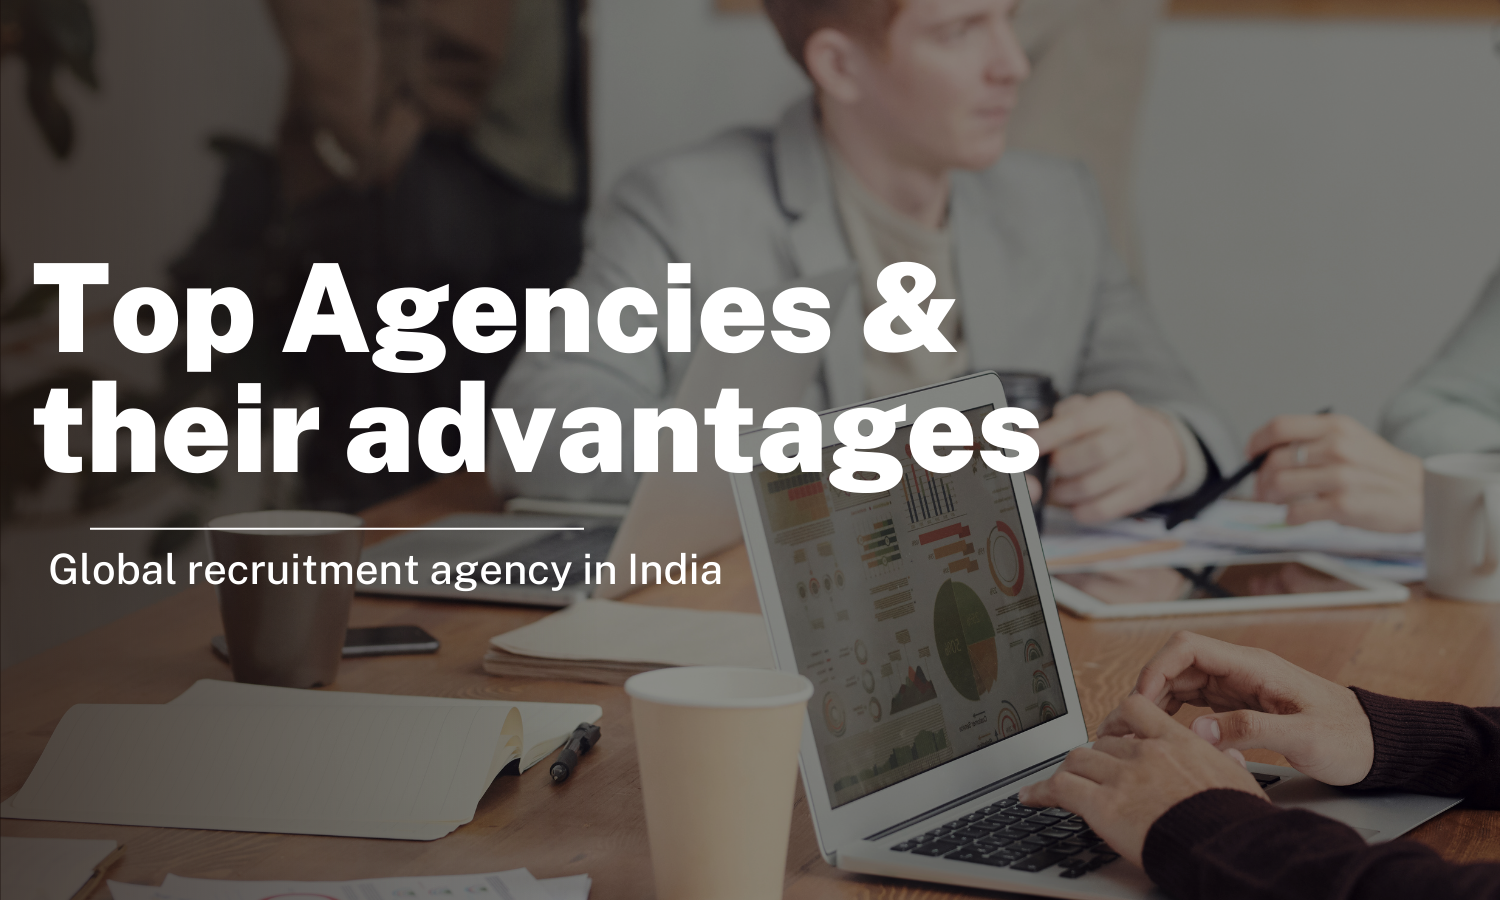 Global recruitment agency in India: Top Agencies